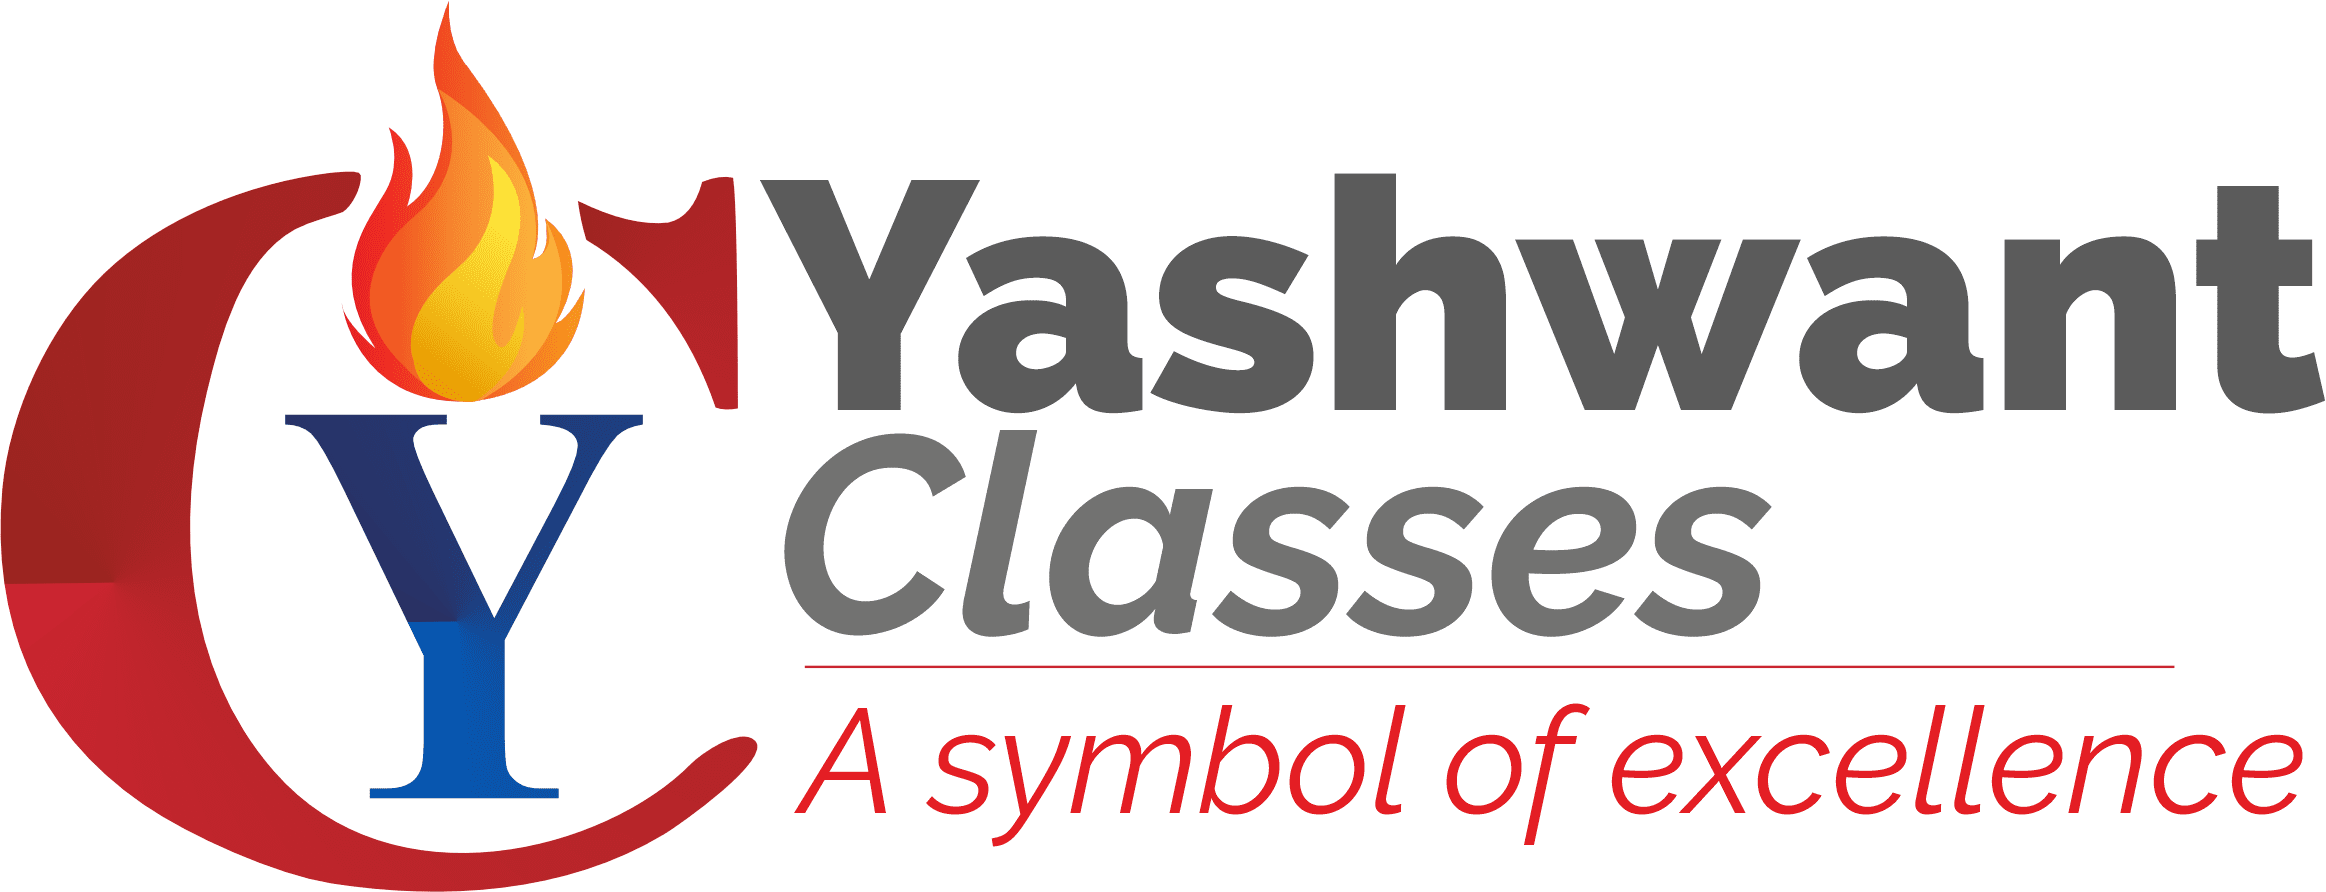 Yashwant Logo COLOR TR HD NEW